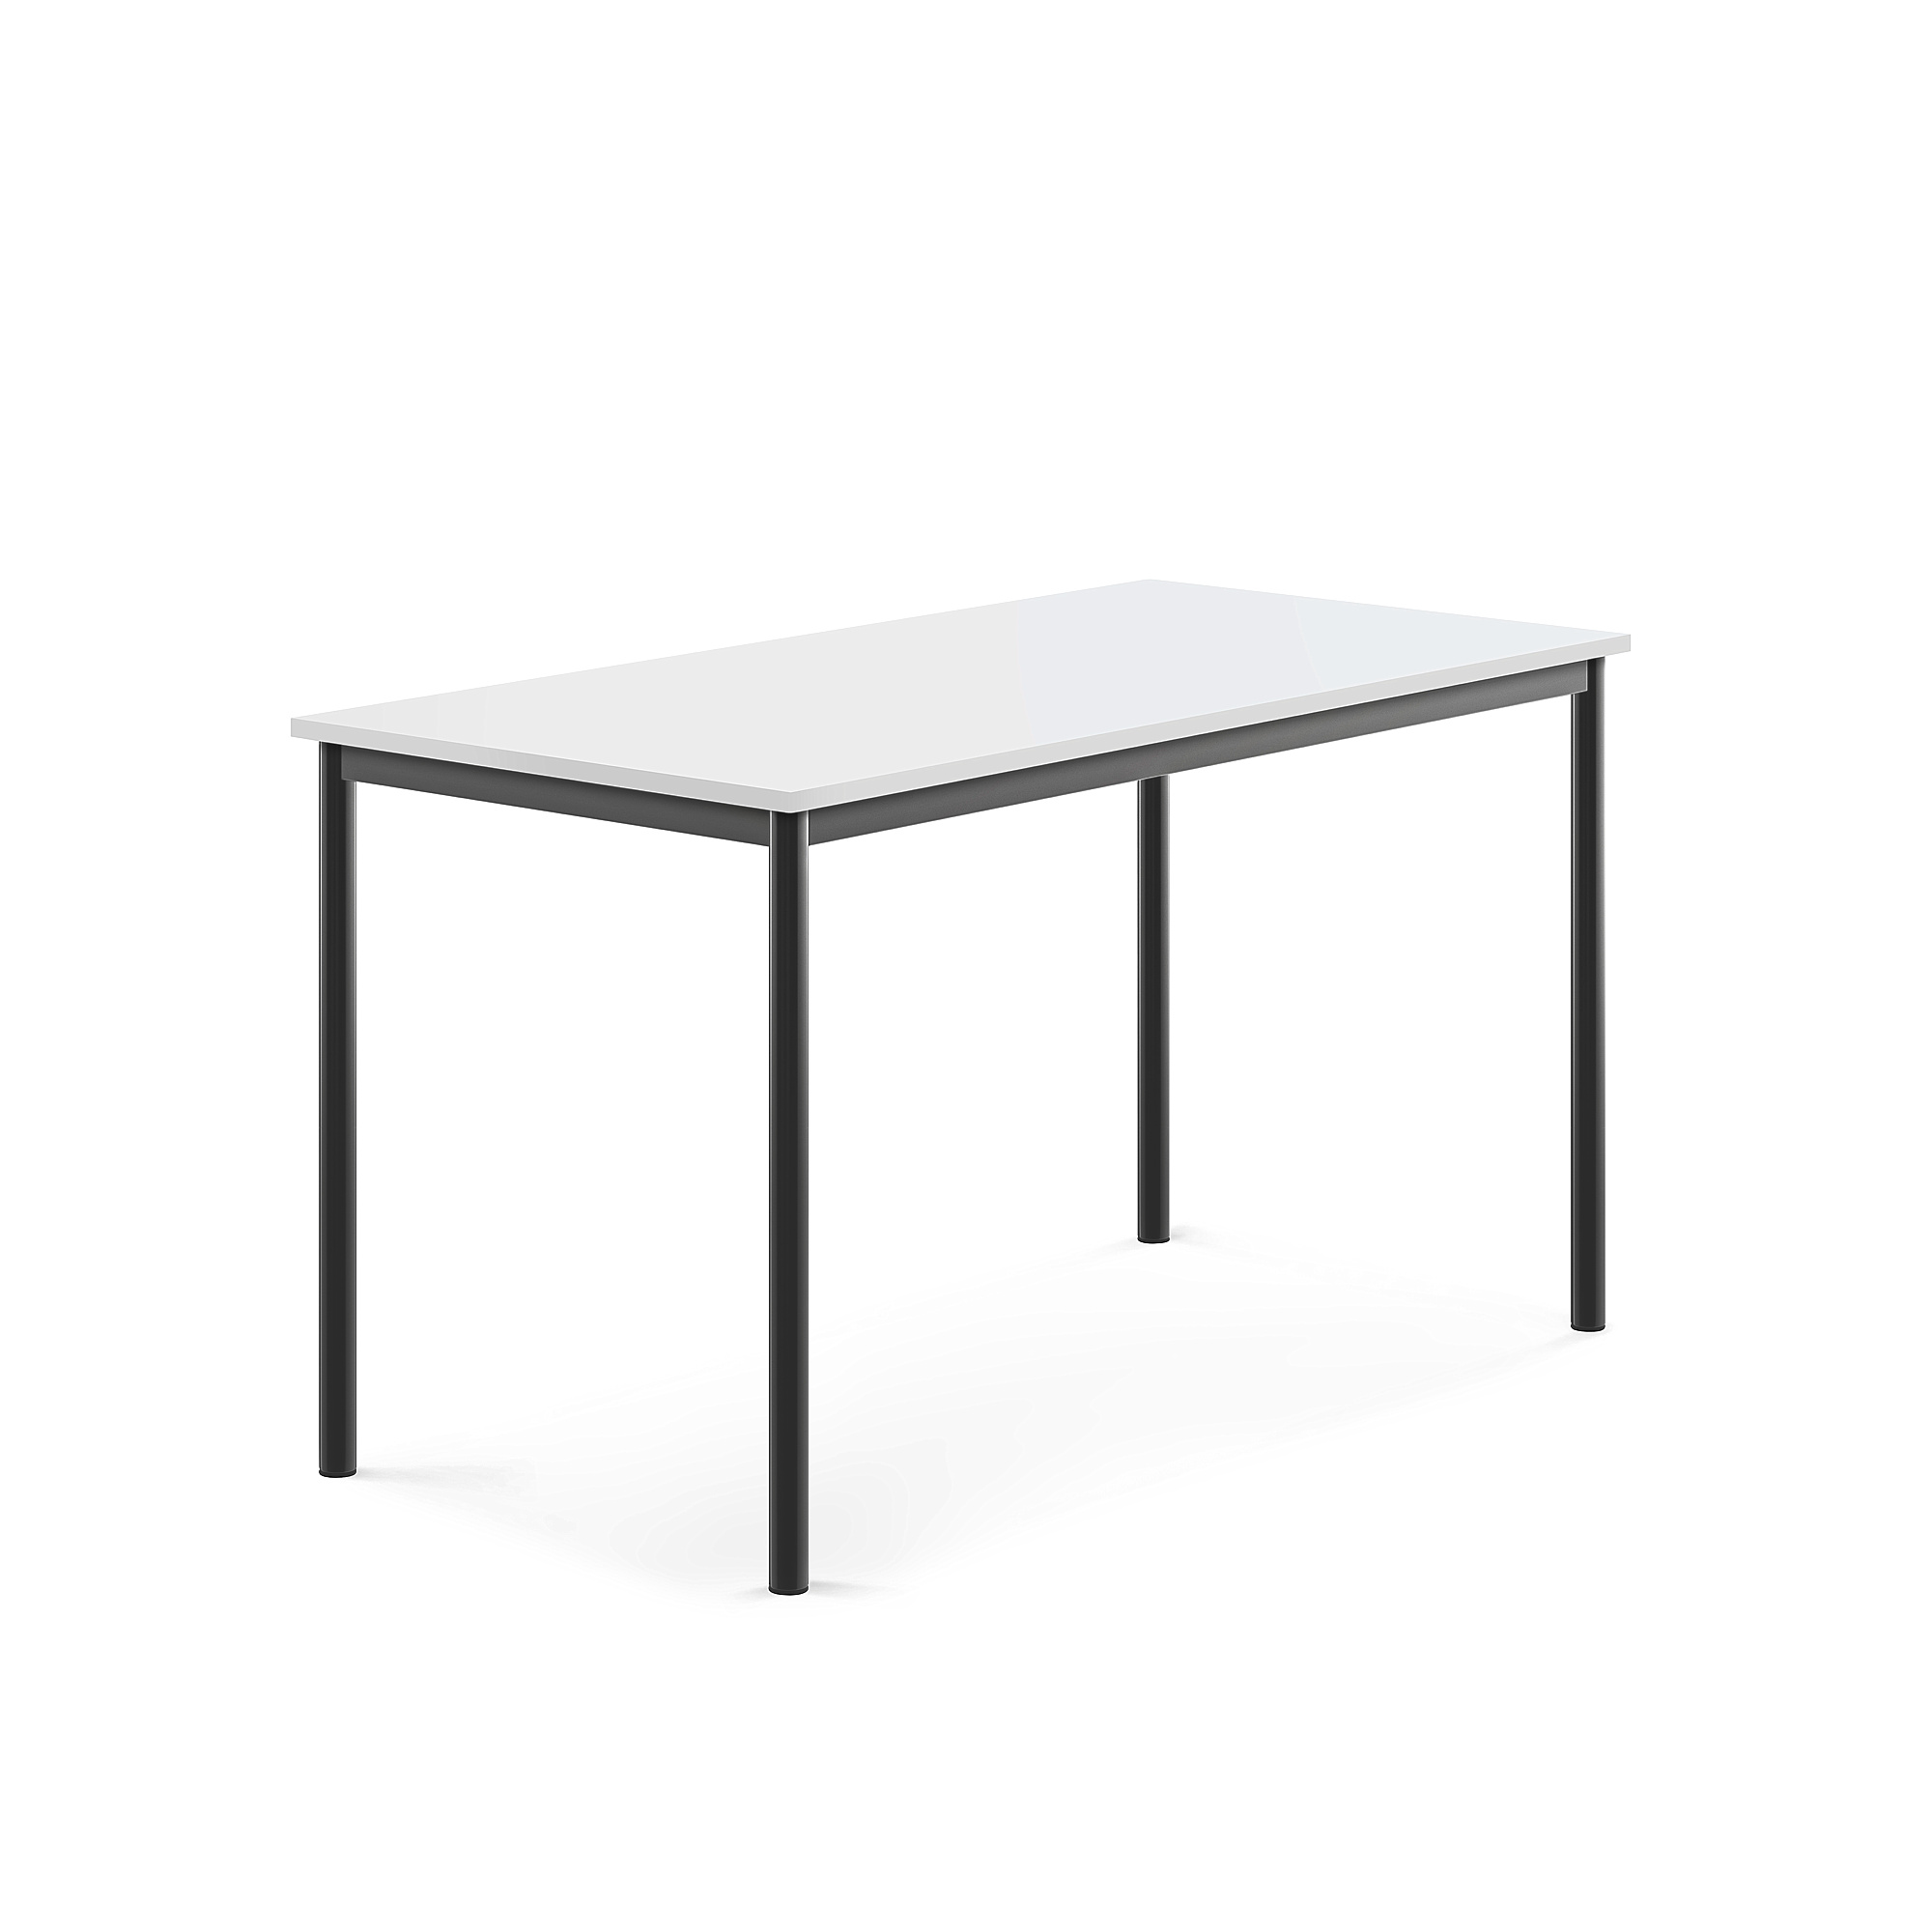 Stůl BORÅS, 1400x700x760 mm, antracitově šedé nohy, HPL deska, bílá